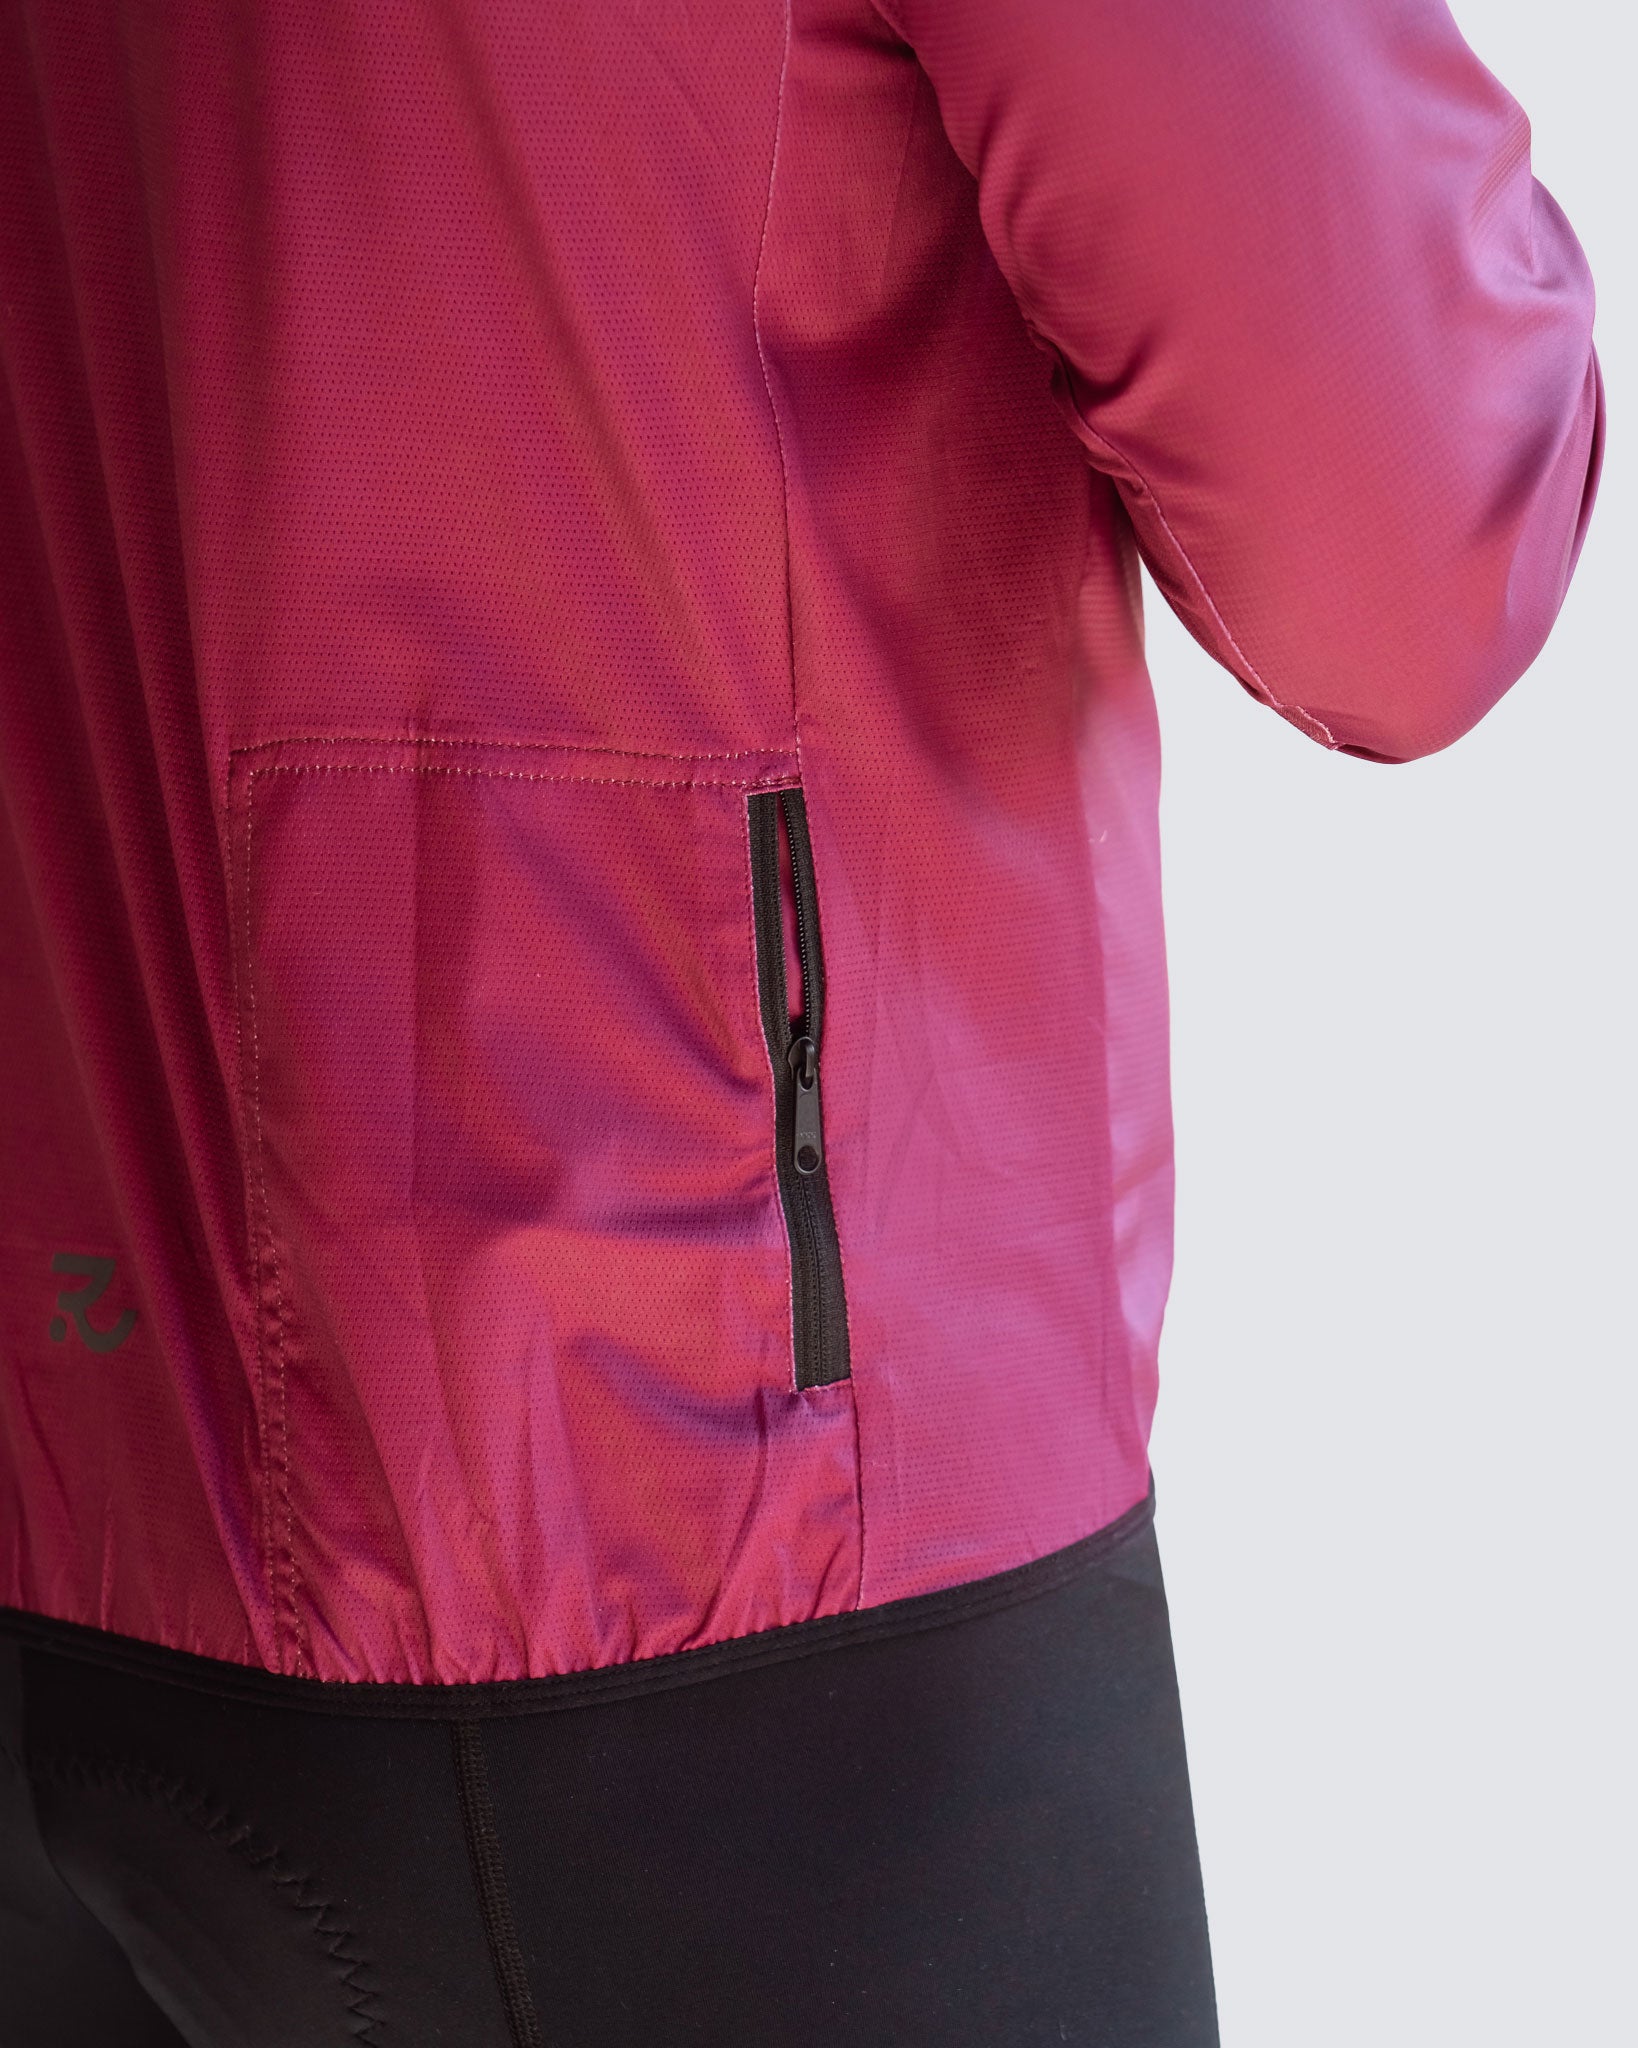 Italian plum men cycling windbreaker safety pocket close up